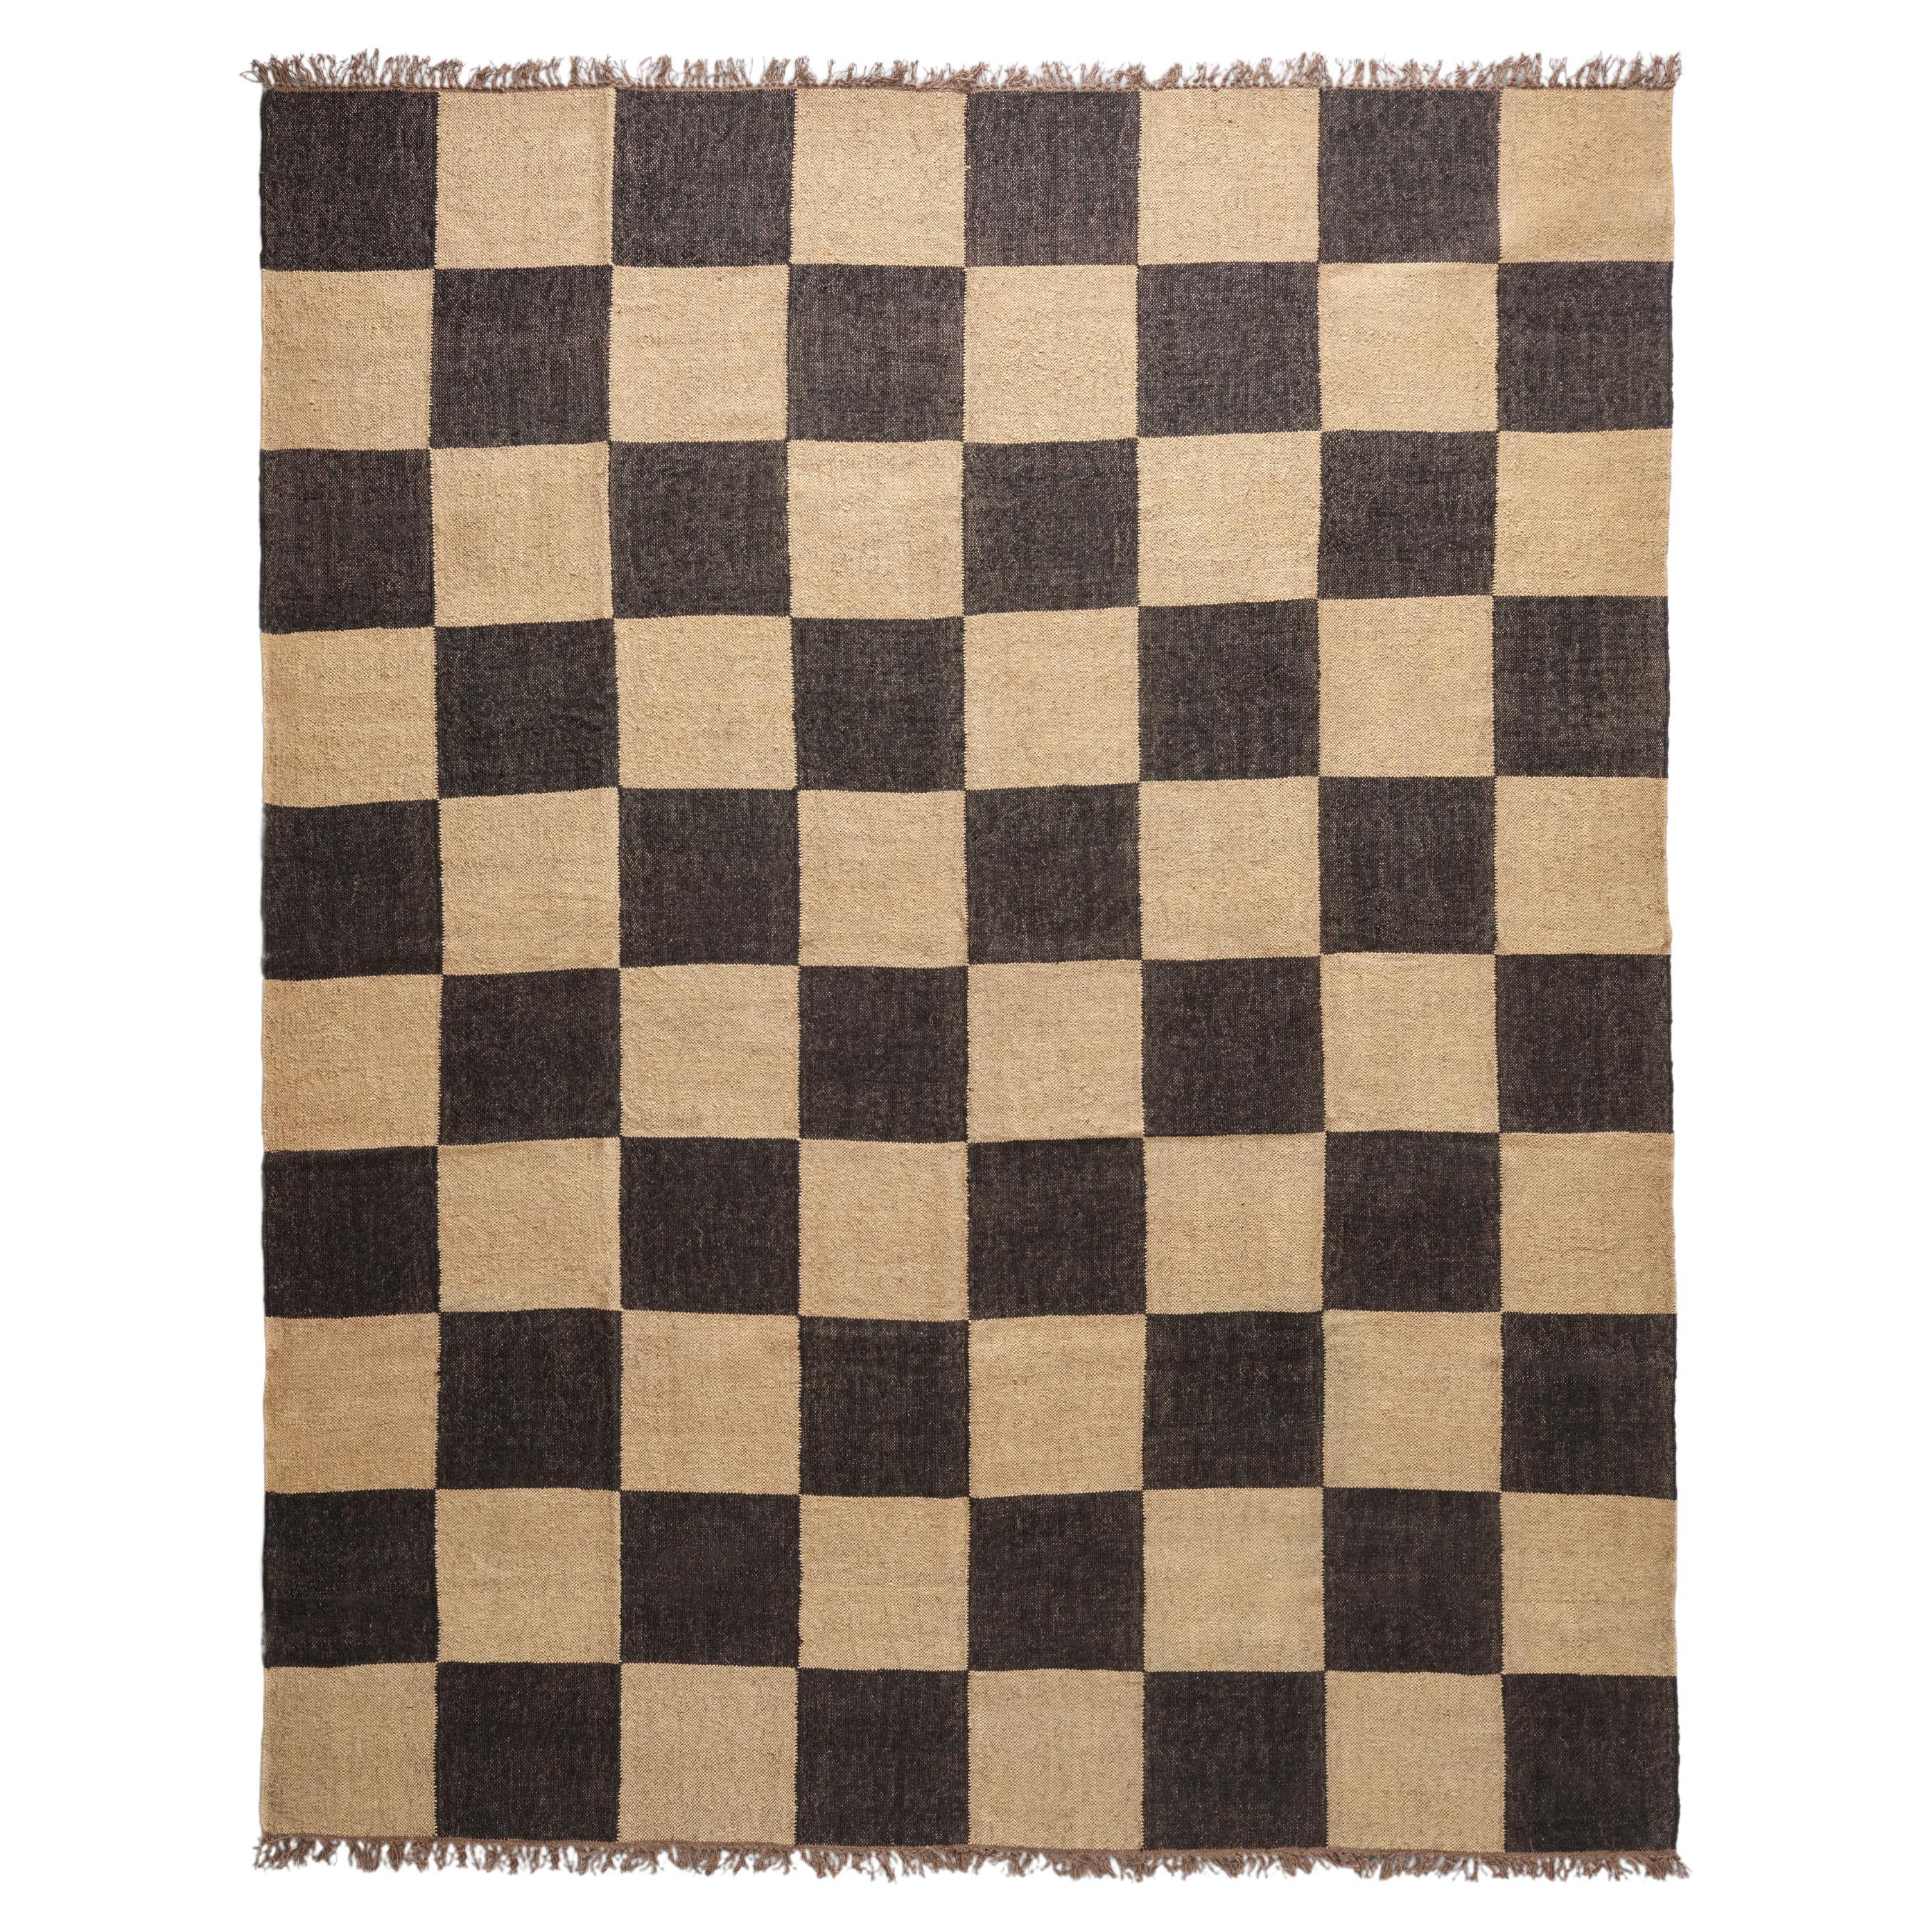 The Forsyth Checkerboard Rug - Big Checks in Off Black, 9x12